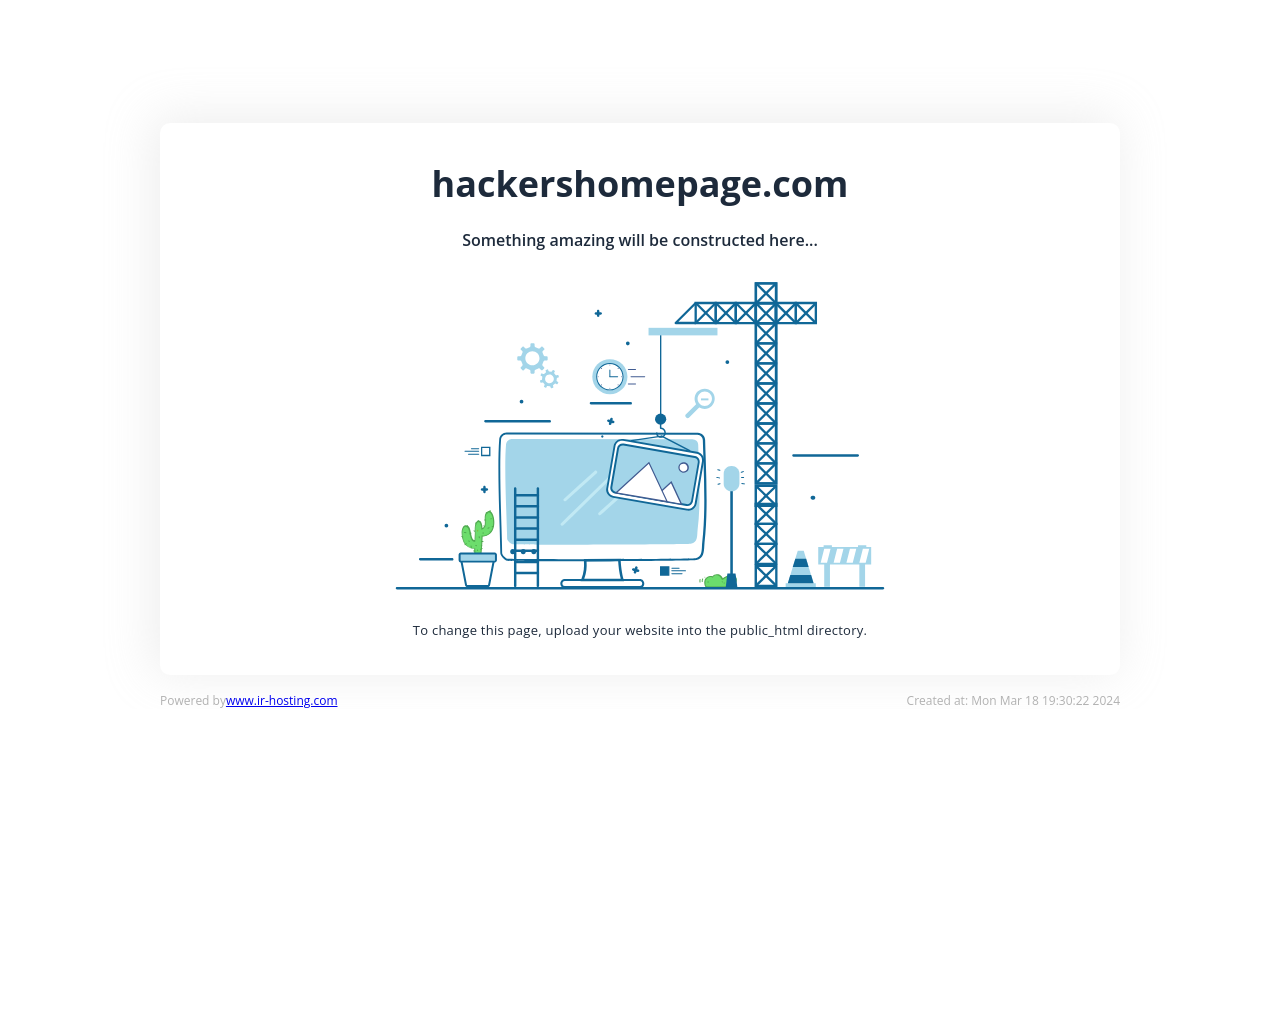 hackershomepage.com